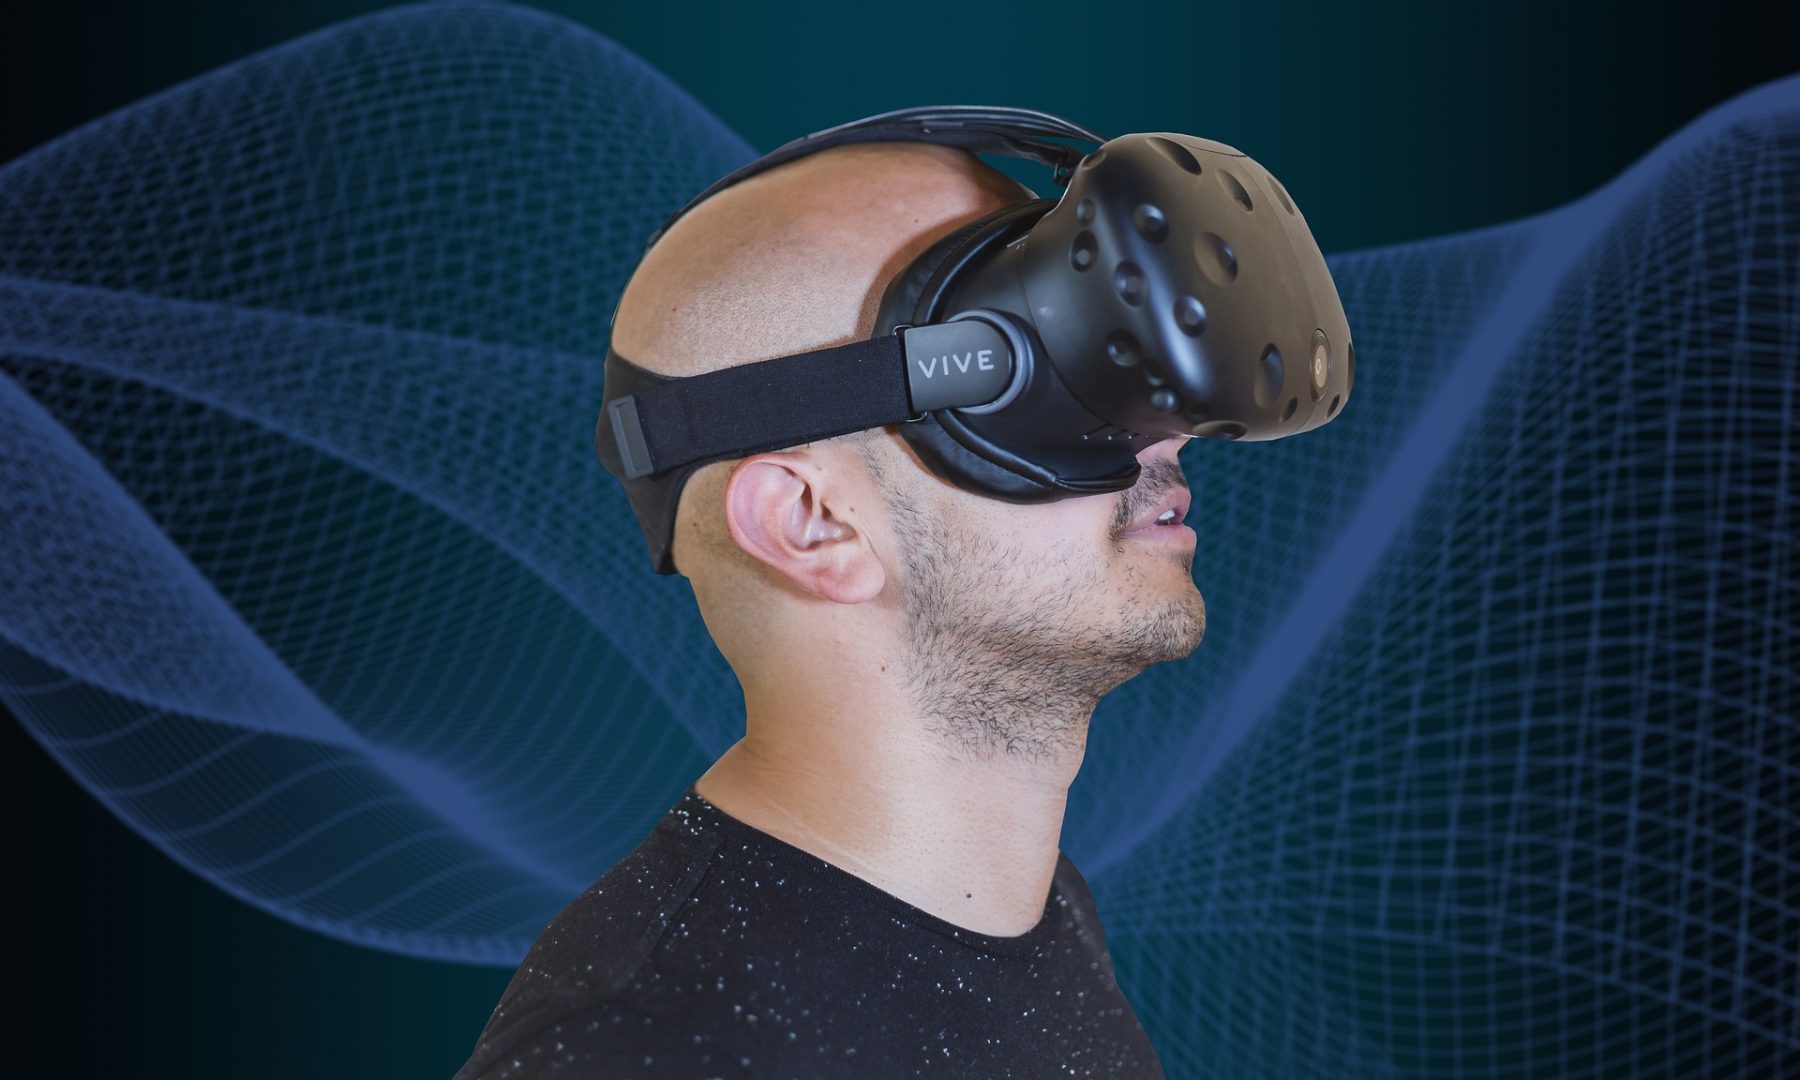 VR headsets: Ακουστικά εικονικής τεχνολογίας ανακατασκευάζουν τις εκφράσεις του προσώπου